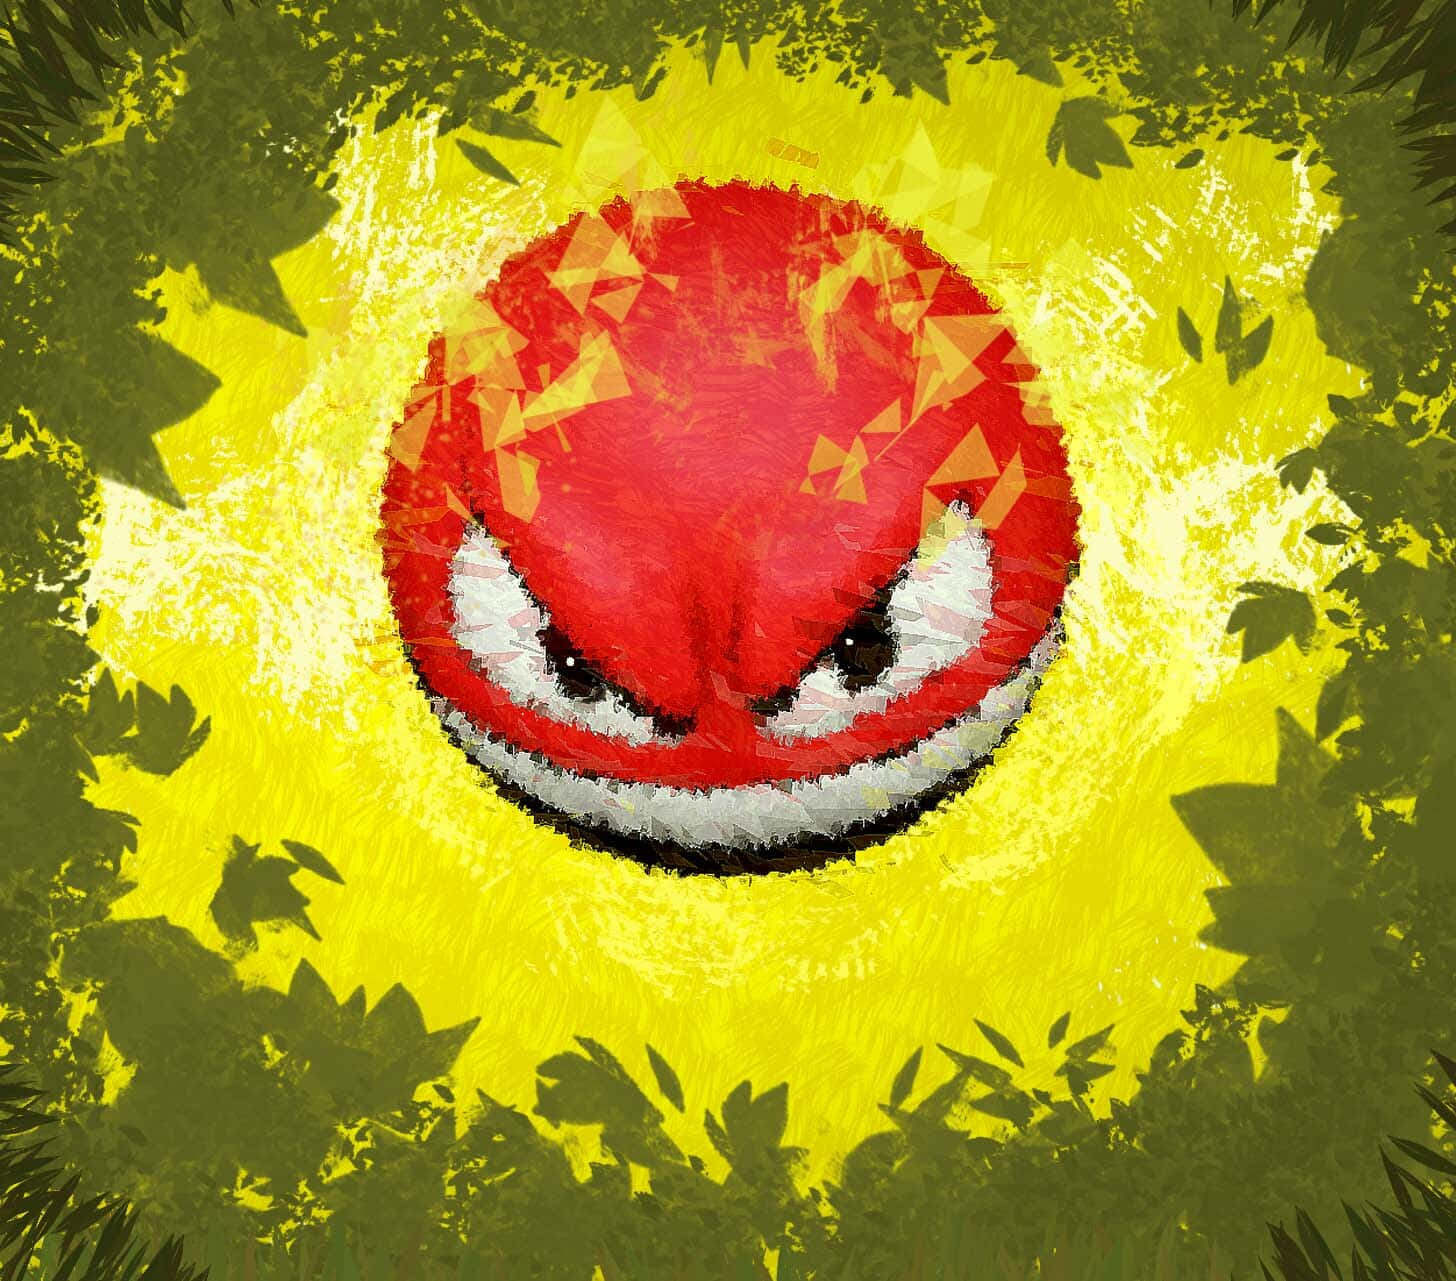 Voltorb - The Electric Type Pokemon Wallpaper